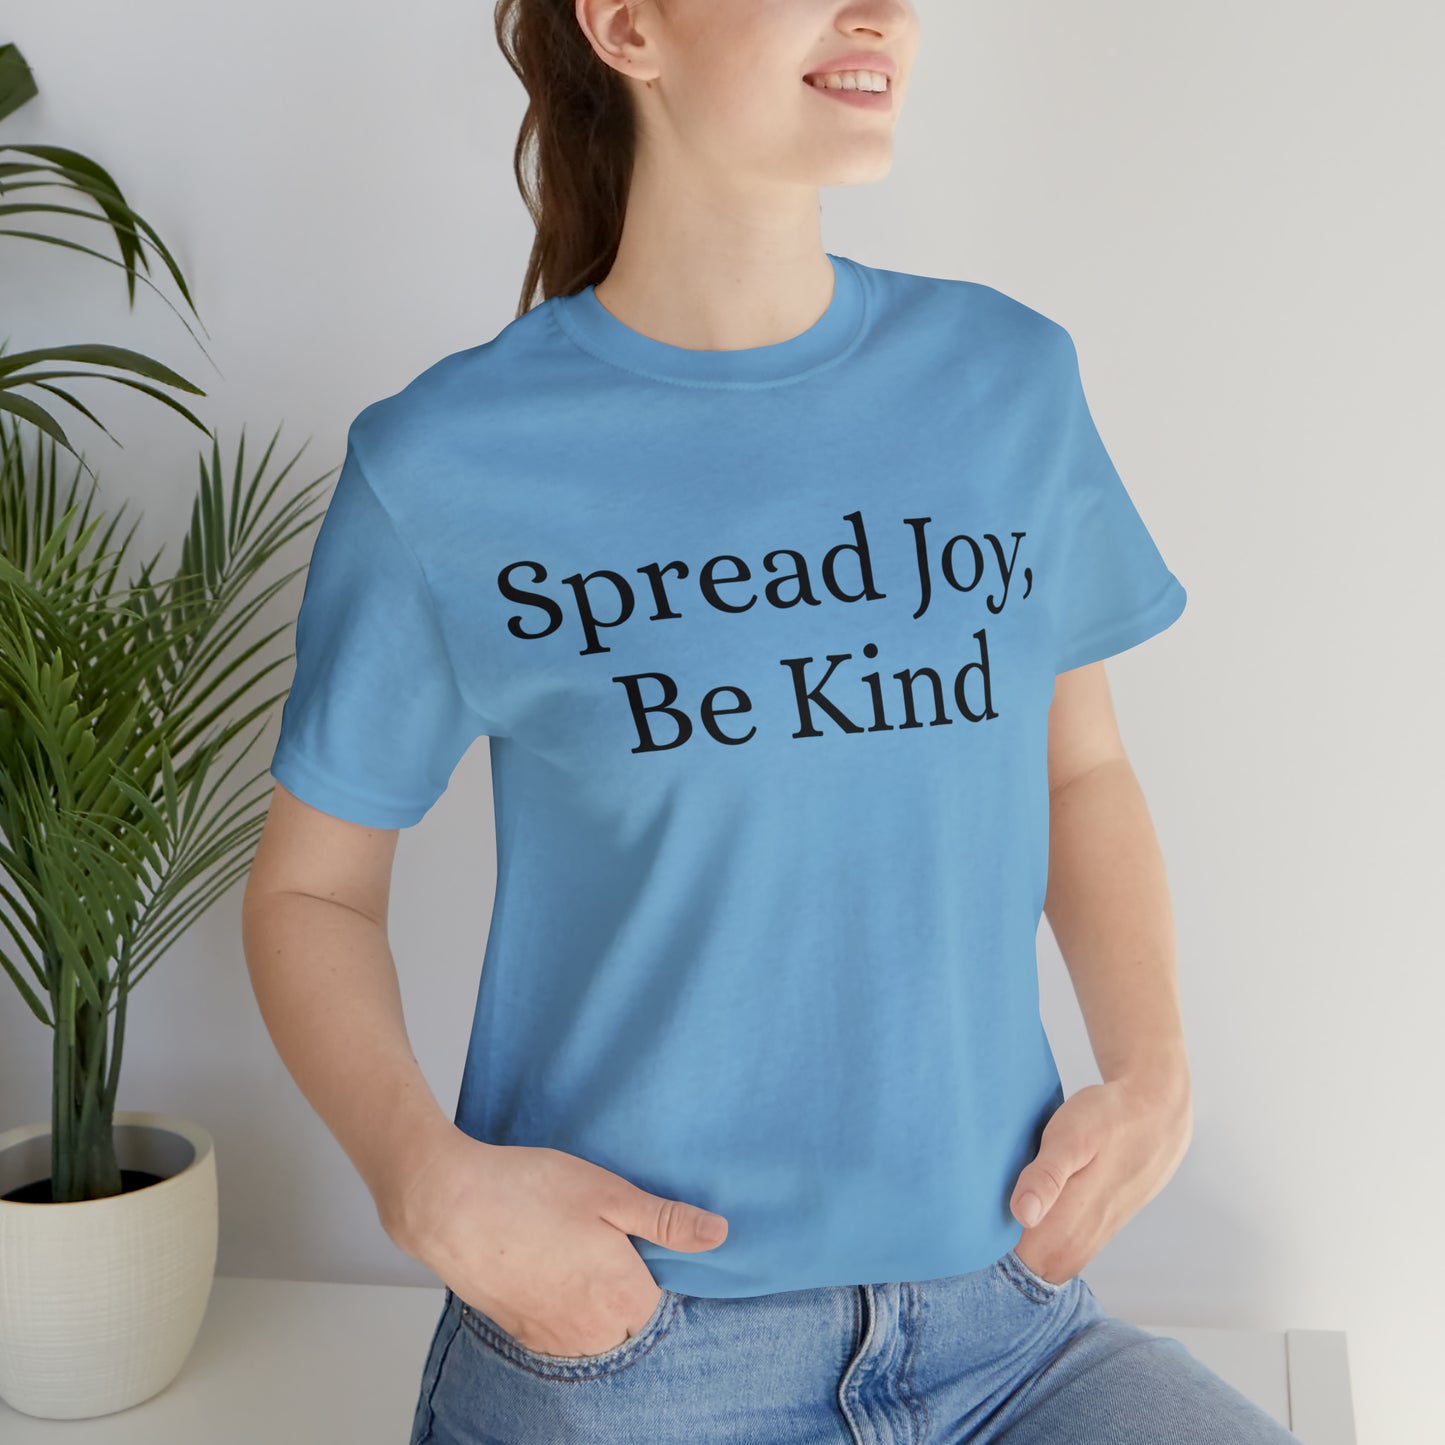 Spread Joy, Be Kind